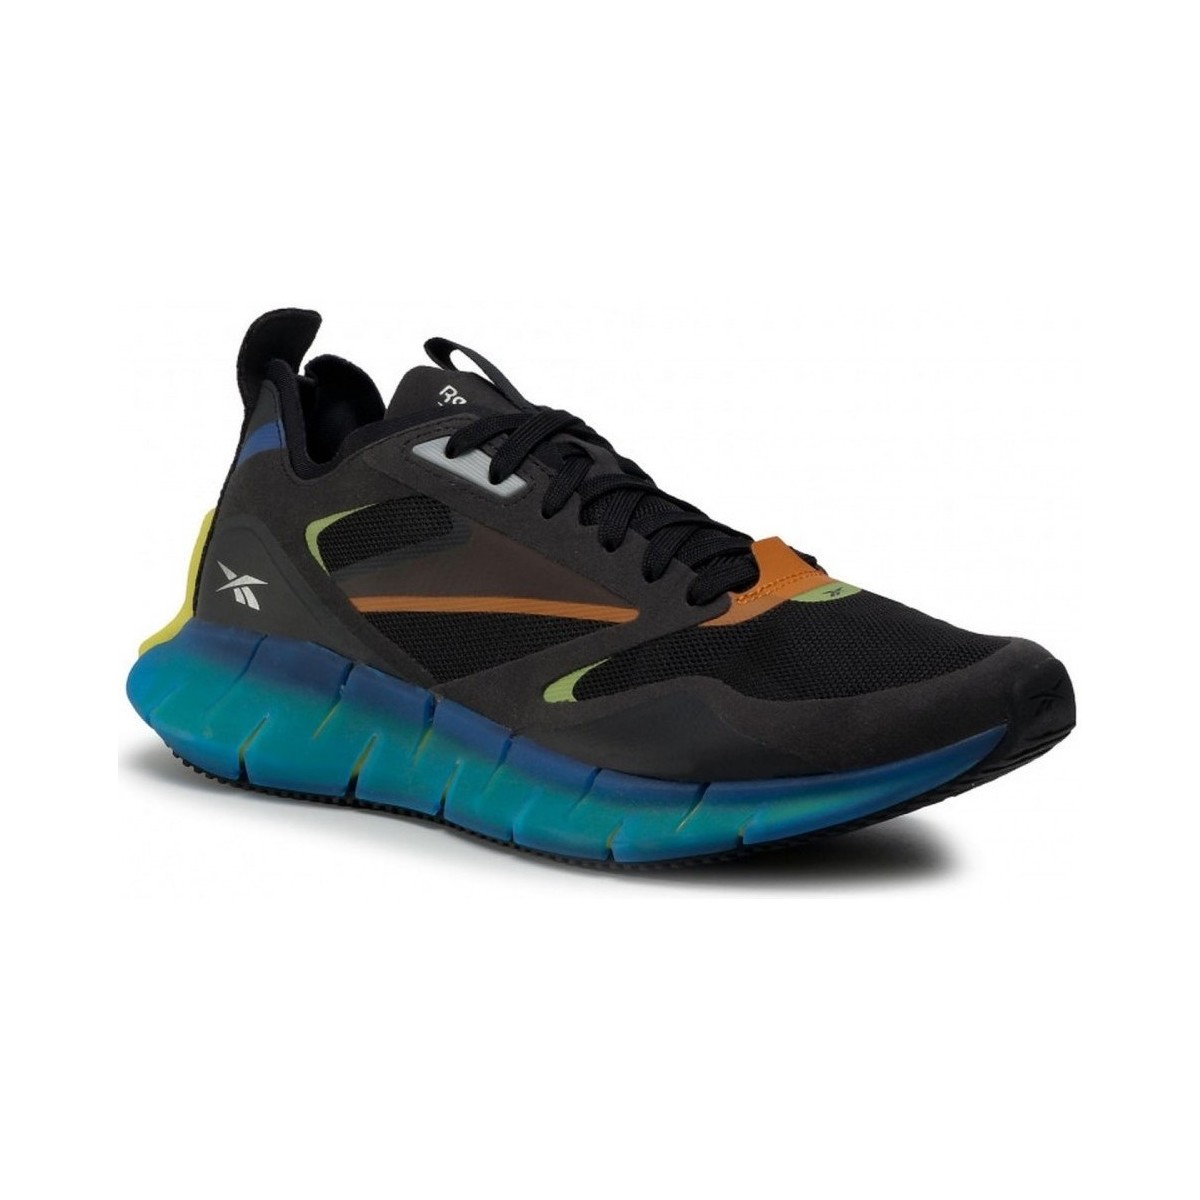 Chaussures Running / trail Reebok Sport Zig Kinetica Horizon Noir